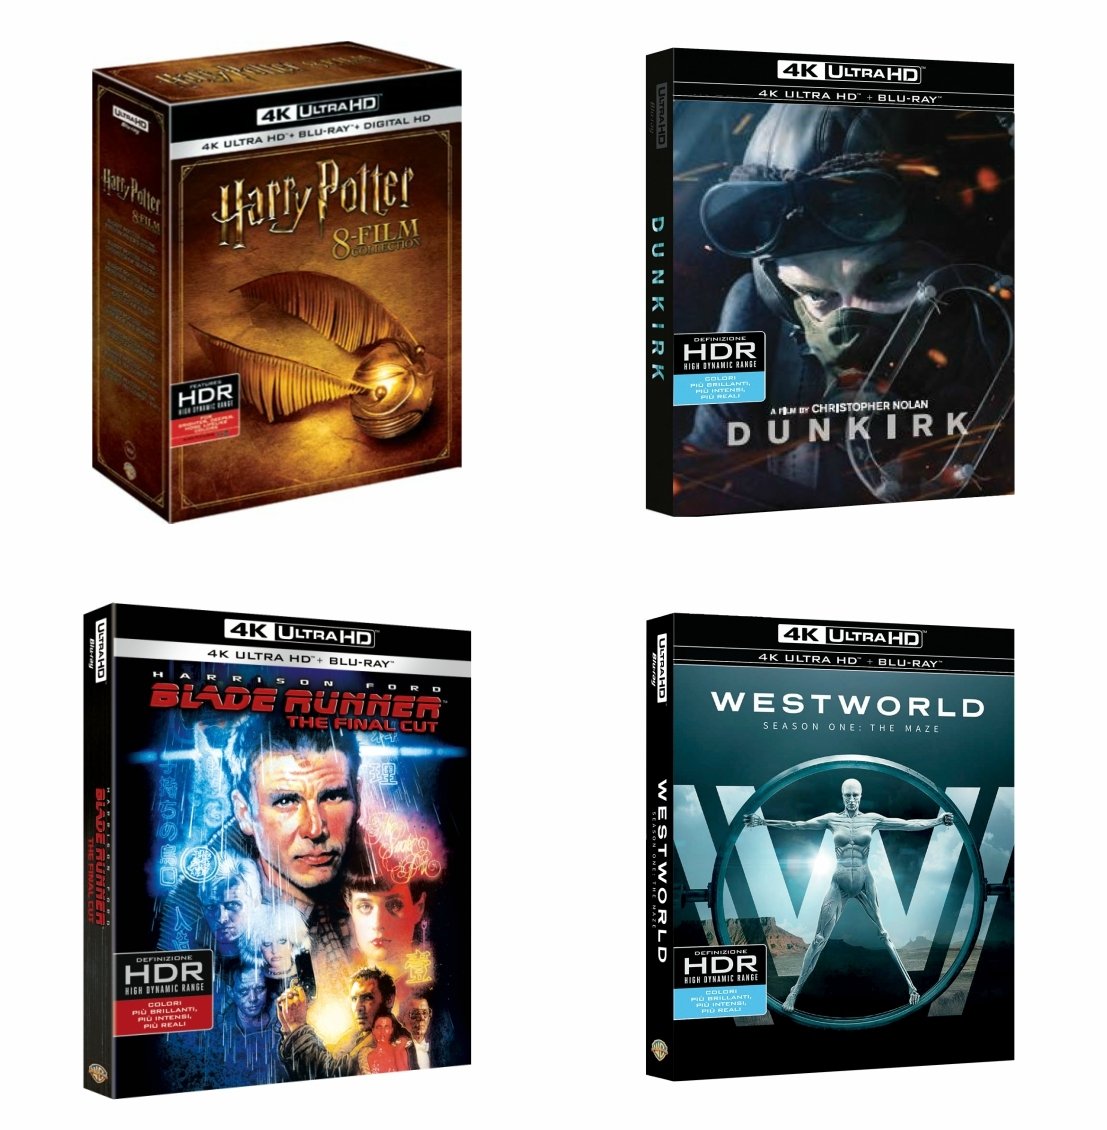 Le proposte in 4K Ultra HD di Warner Bros. per Natale 2017